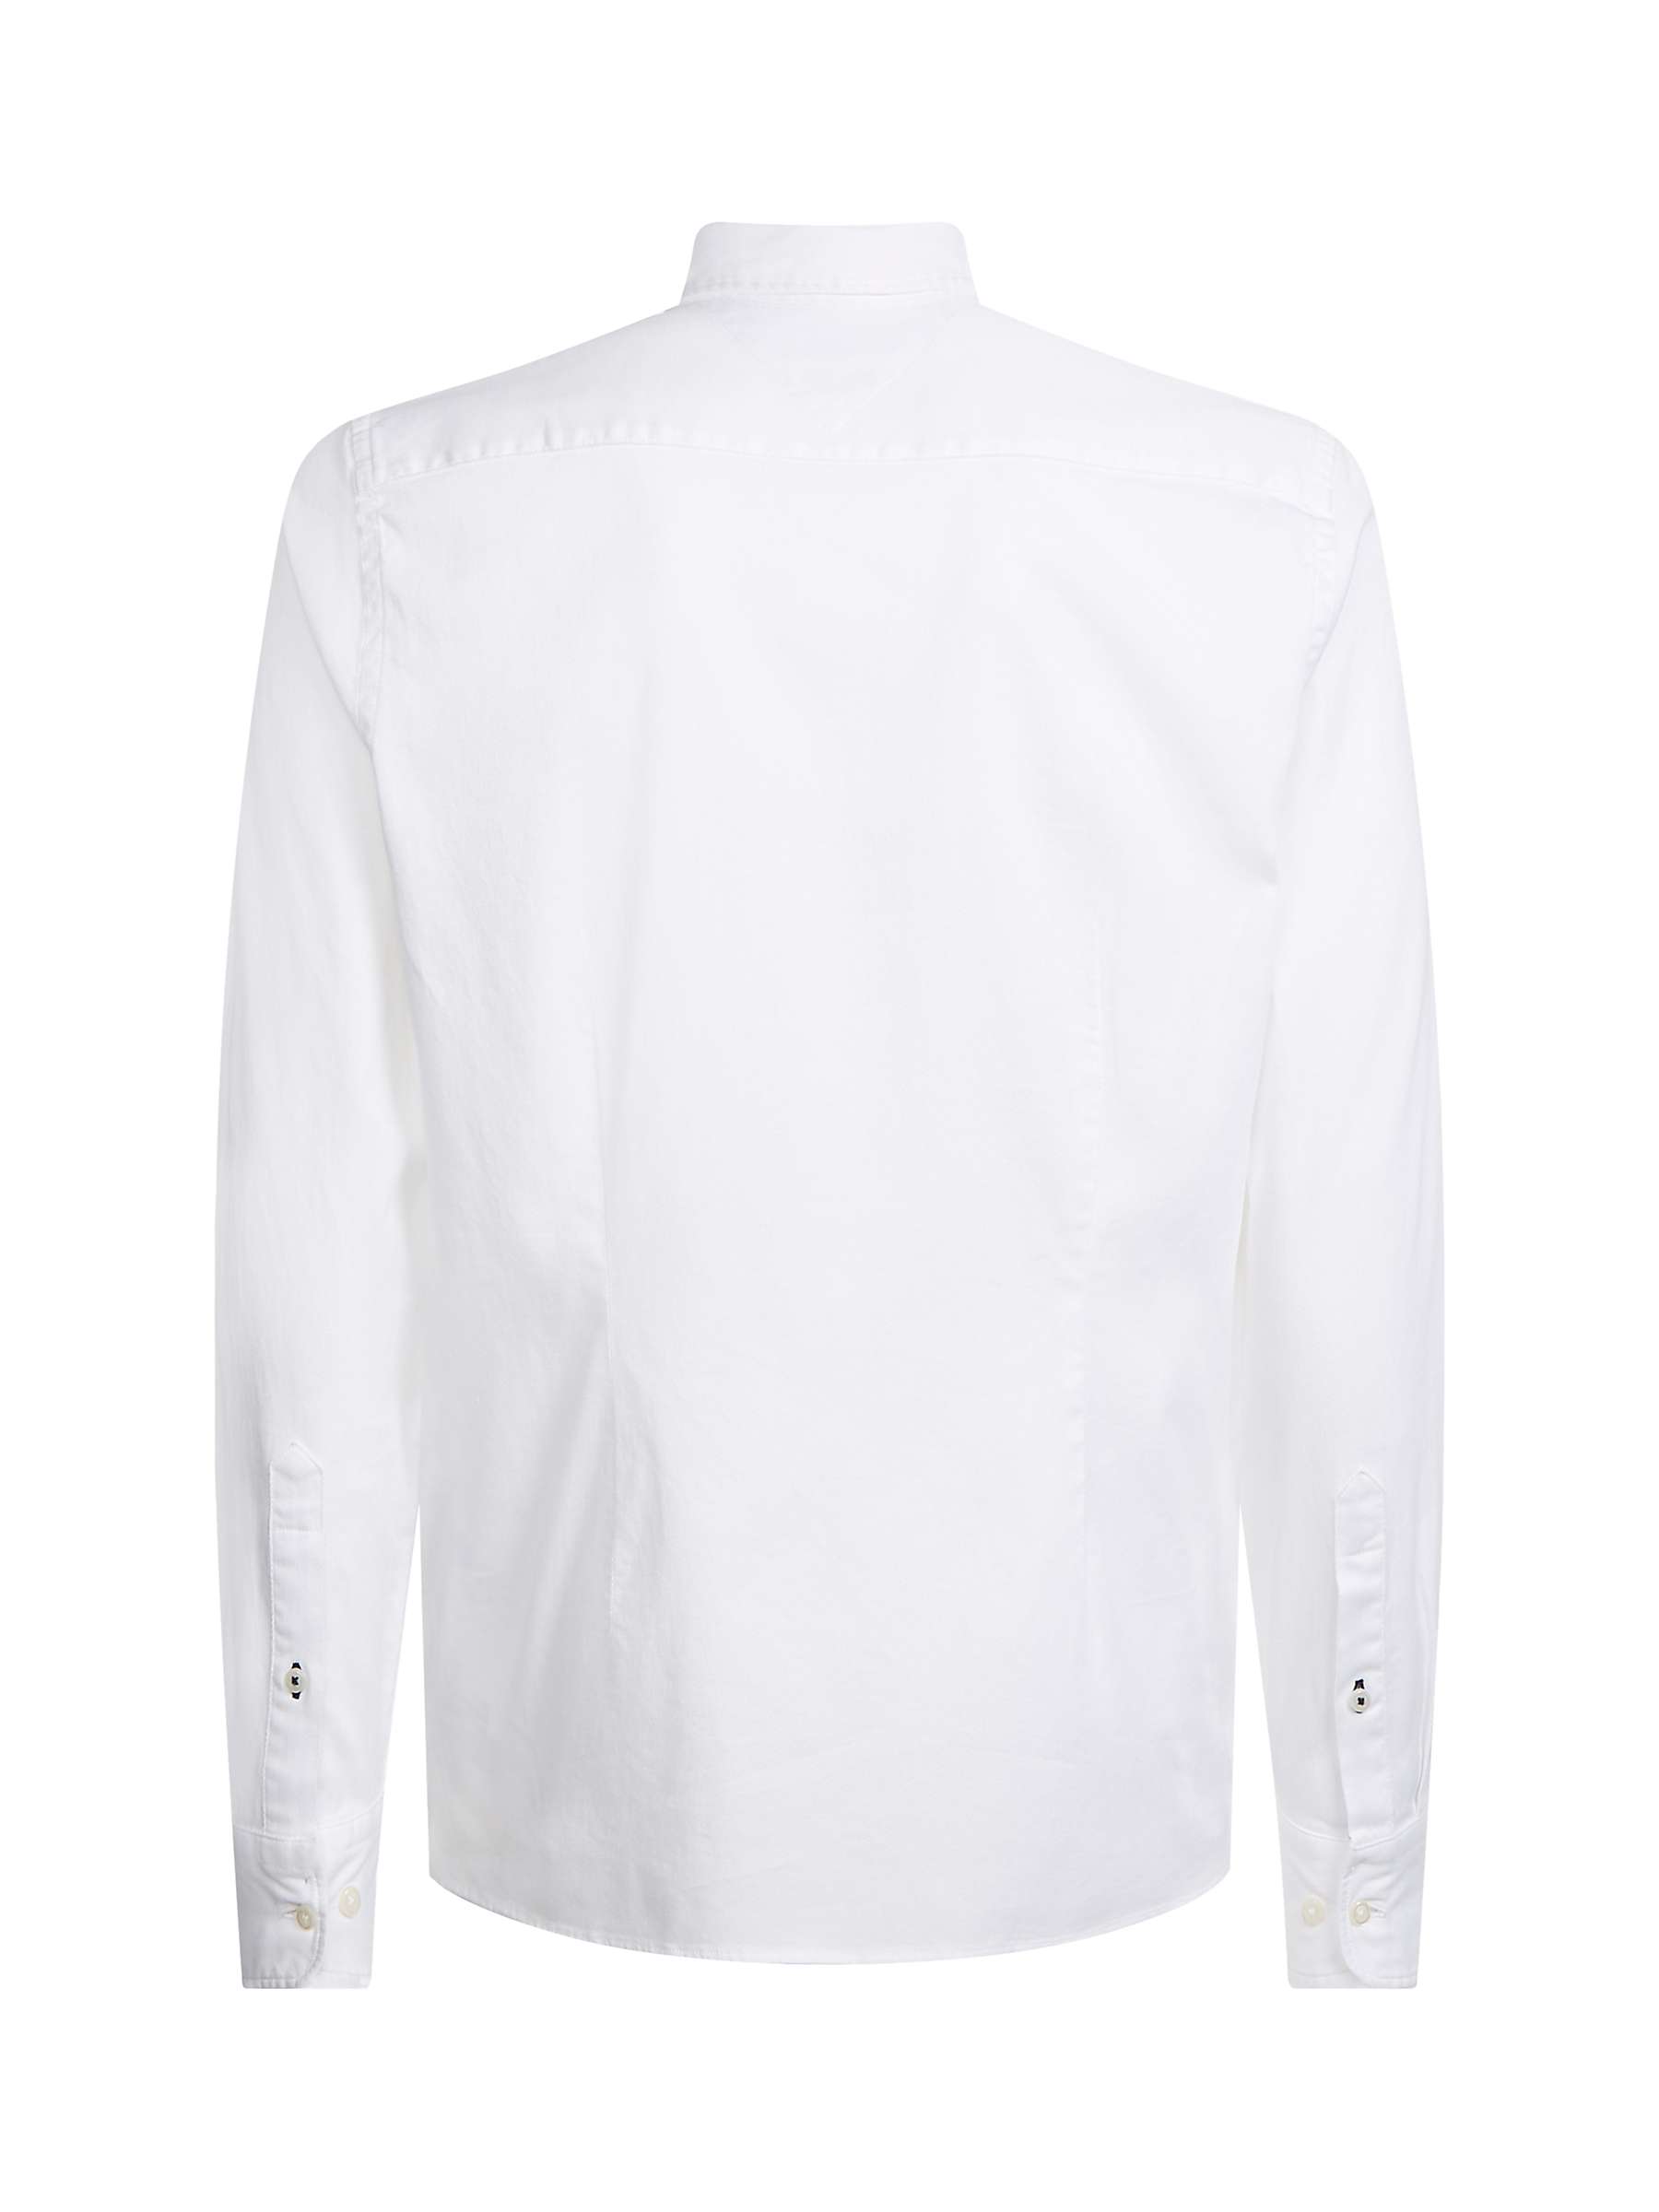 Buy Tommy Hilfiger Core Flex Dobby Slim Fit Shirt Online at johnlewis.com